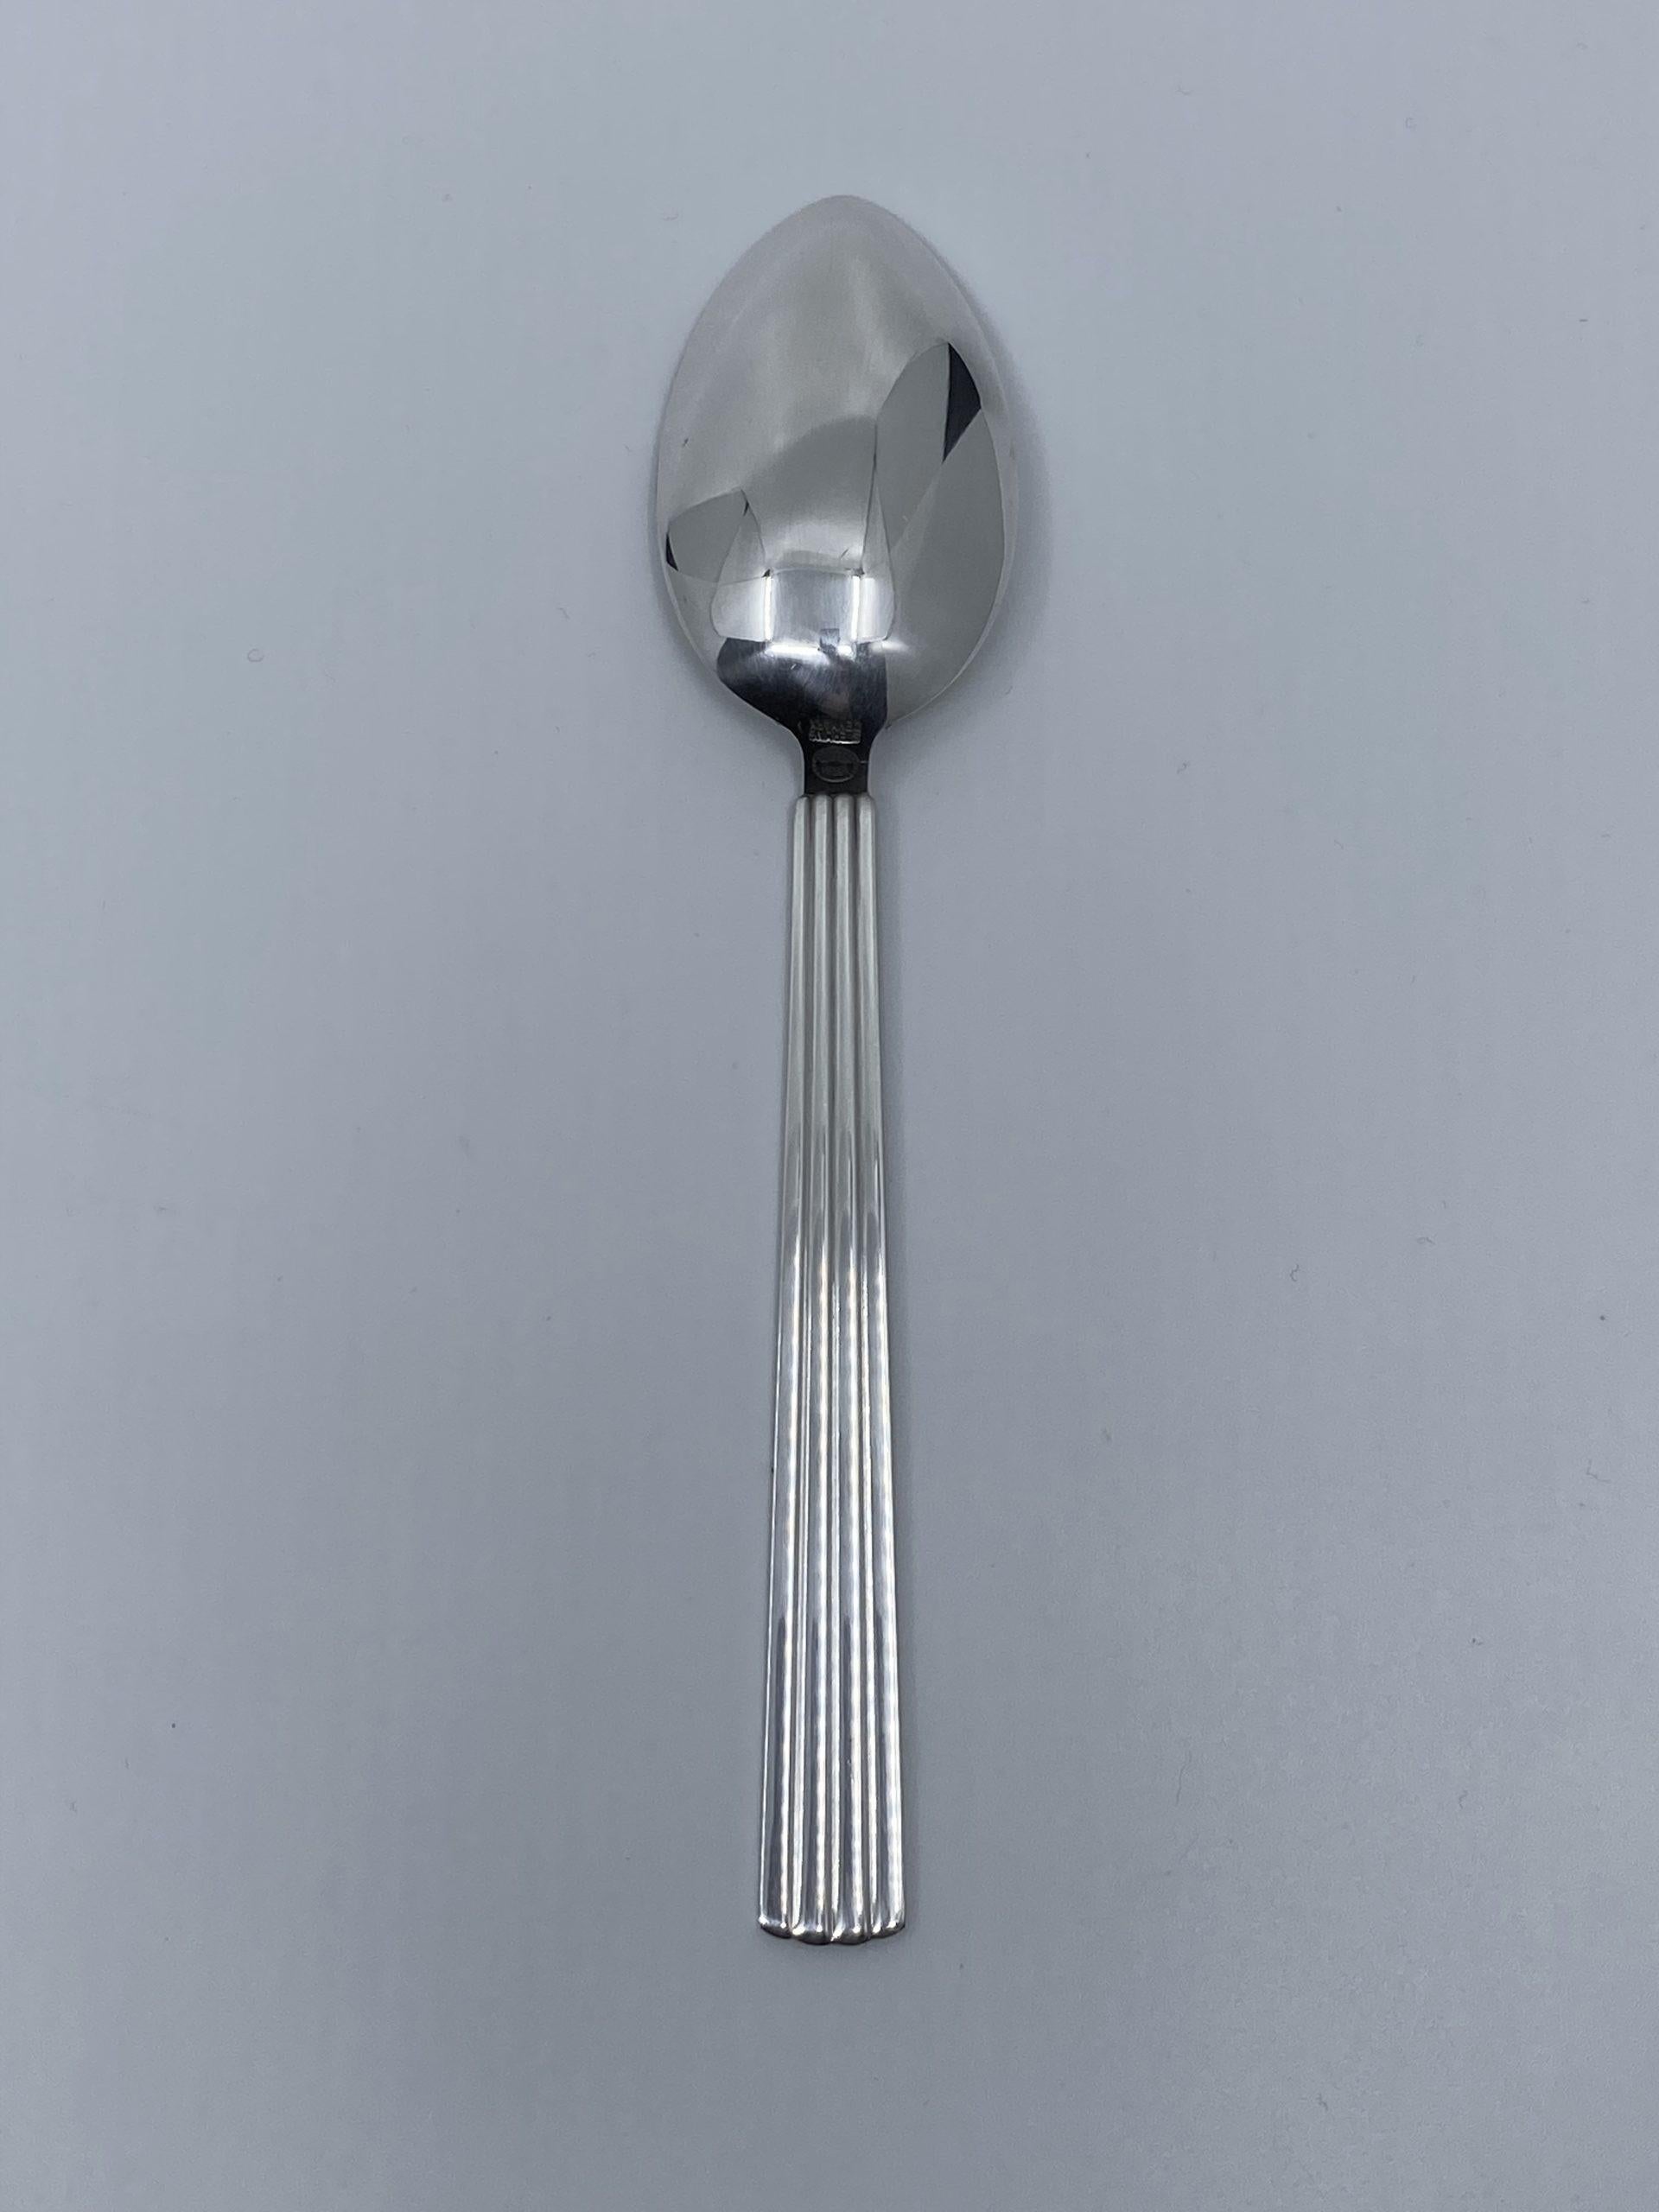 A sterling silver Georg Jensen dessert spoon, item #021 in the Bernadotte pattern, design #9 from 1939 by Sigvard Bernadotte.

Additional information:
Material: Sterling silver
Styles: Art Deco
Hallmarks: With Georg Jensen hallmark, made in